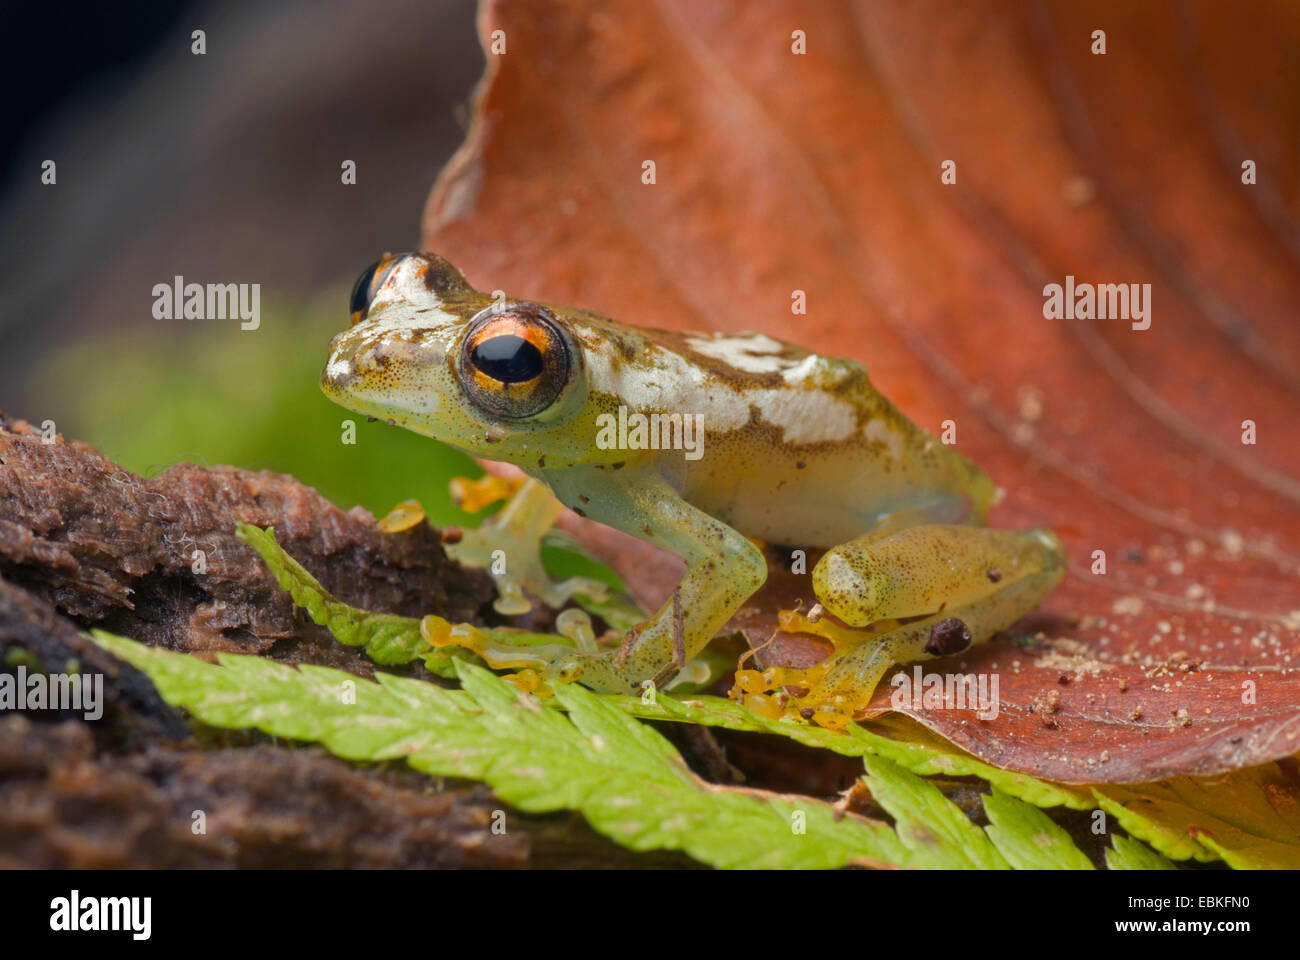 Reed frog (Hyperolius spinigularis), on a leaf Stock Photo